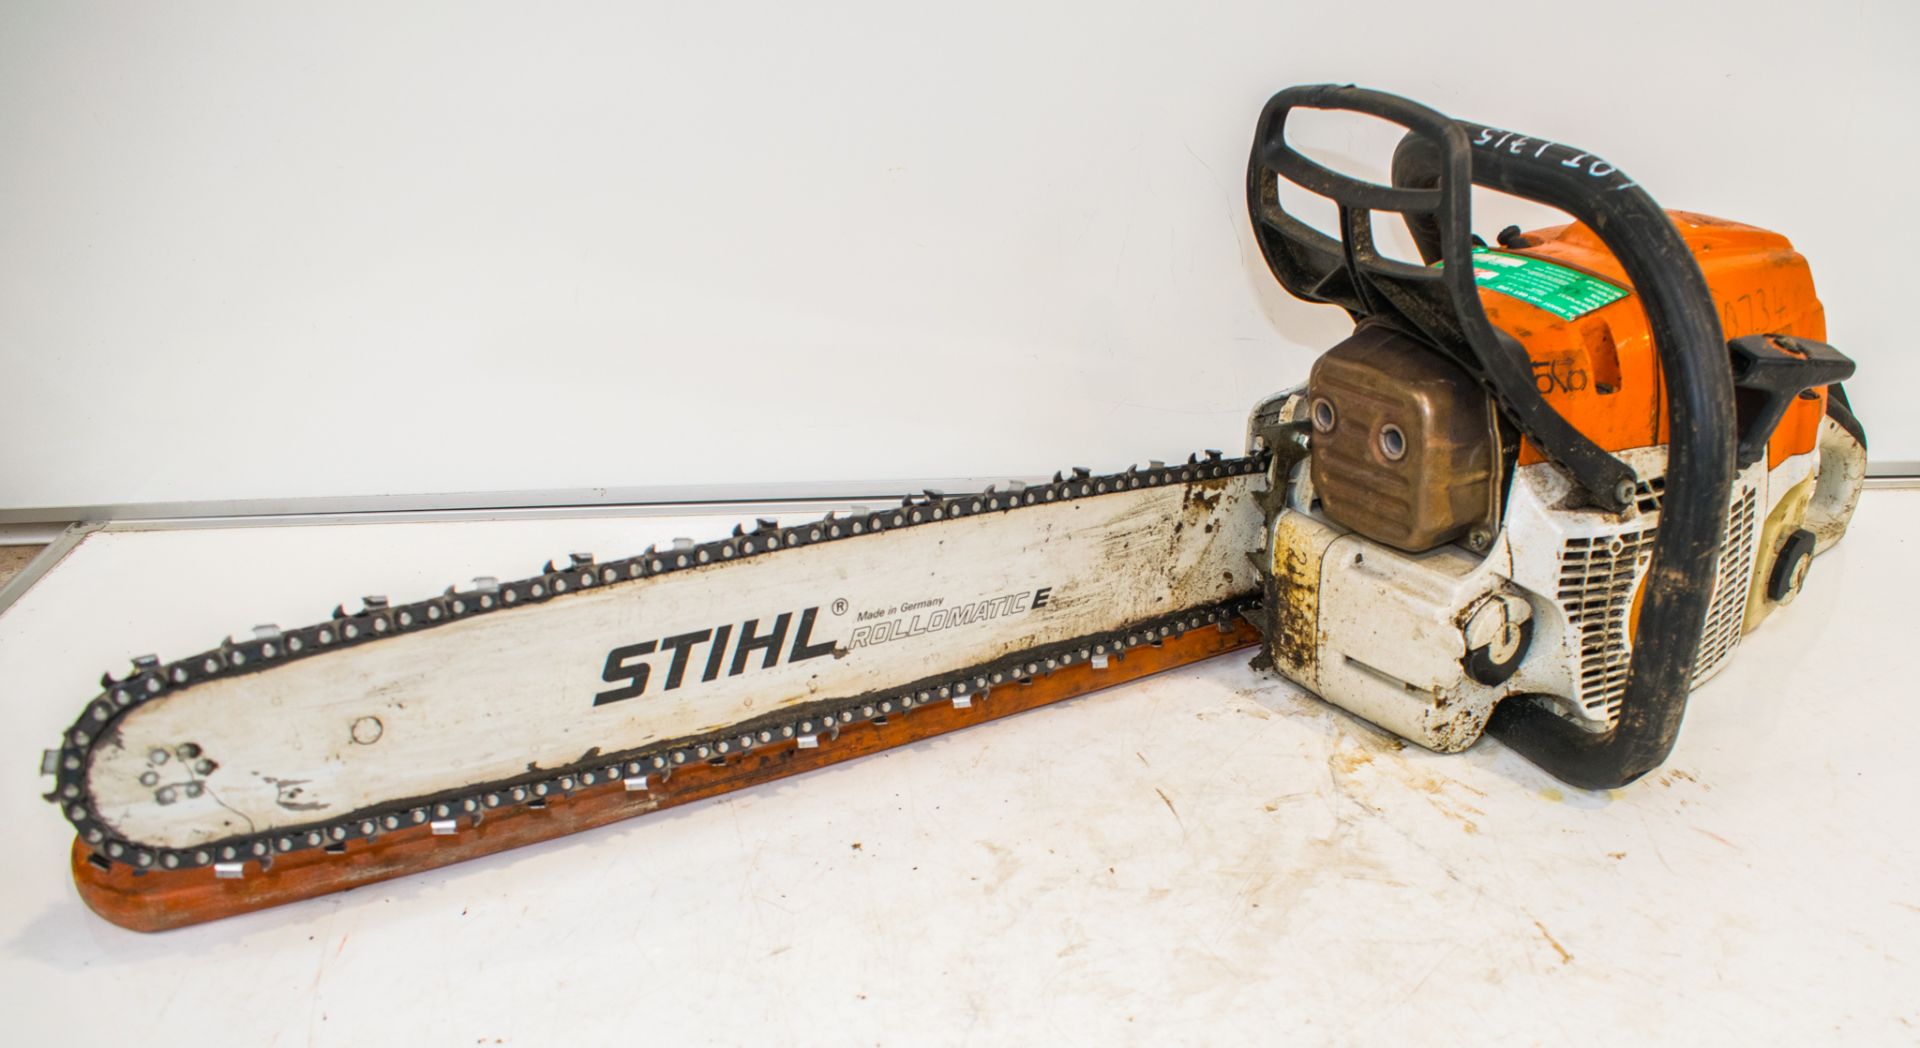 Stihl MS362c petrol driven chain saw